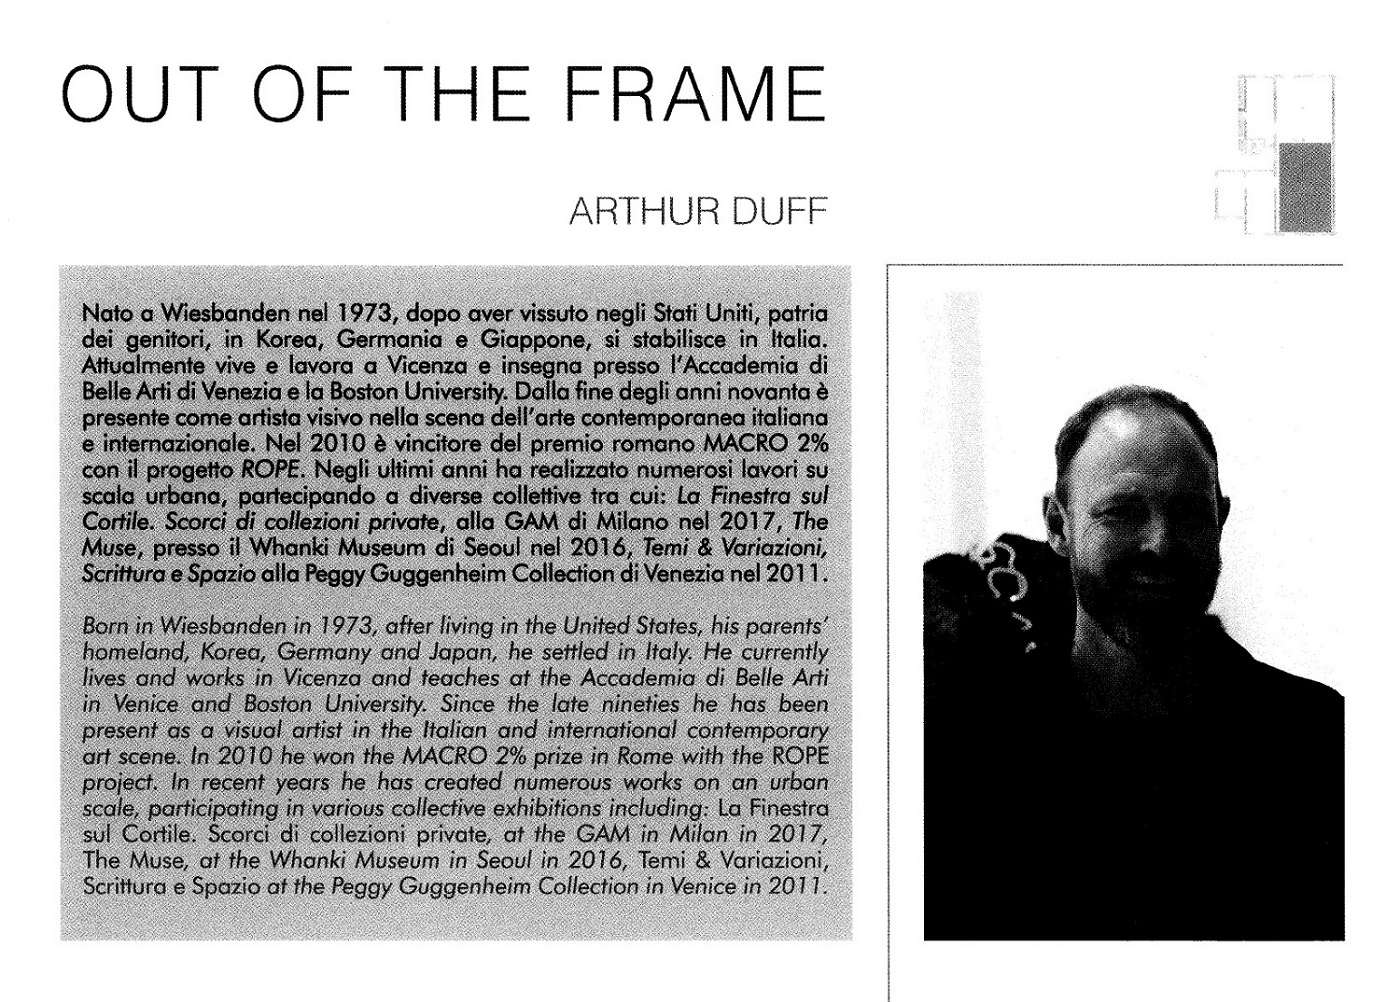 Arthur Duff Biography page 1